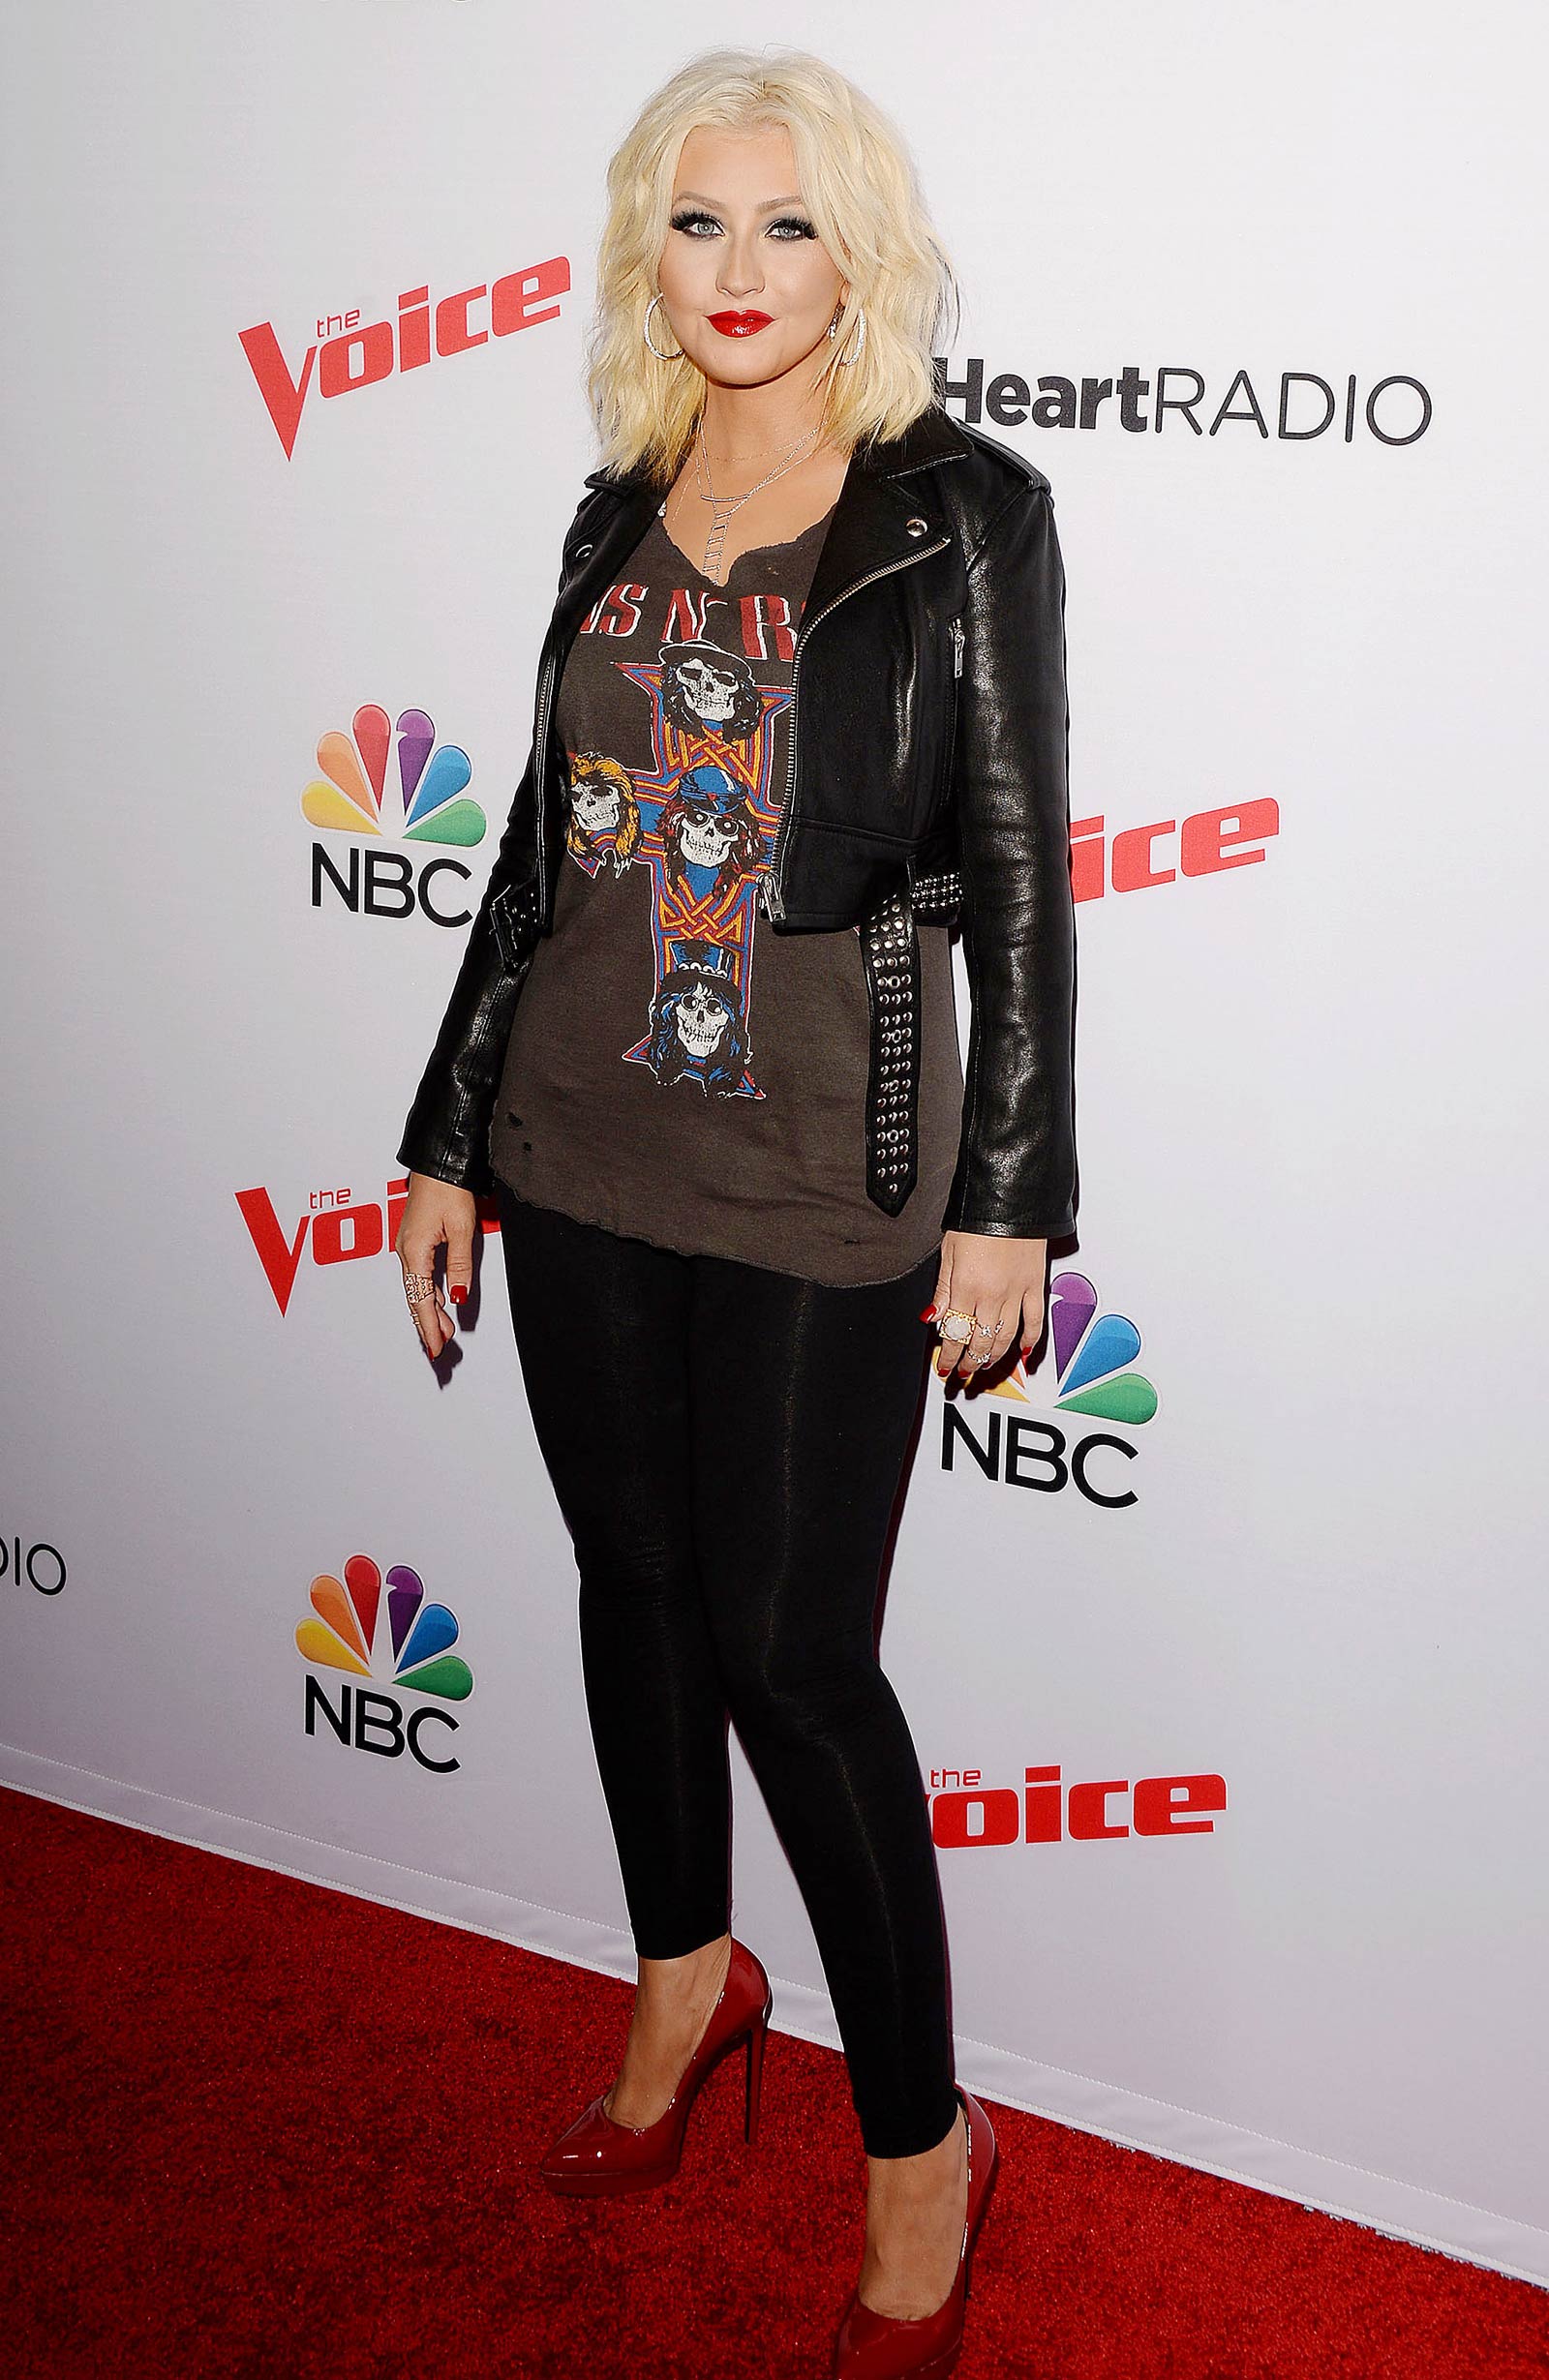 Christina Aguilera attends NBC The Voice Season 8 red carpet event